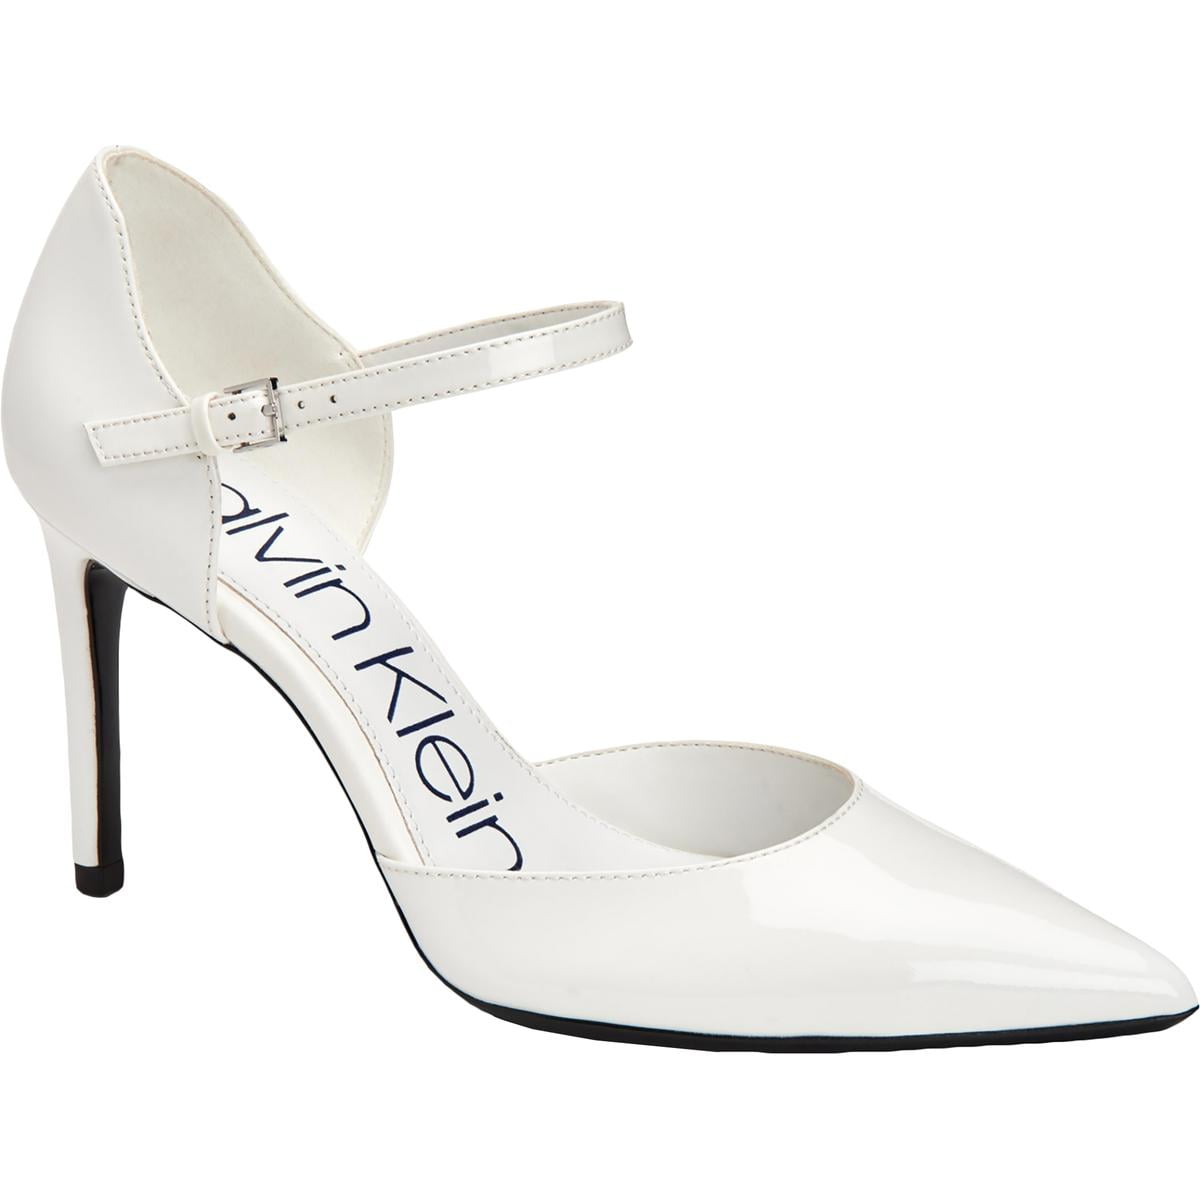 Introducir 95+ imagen calvin klein heels white